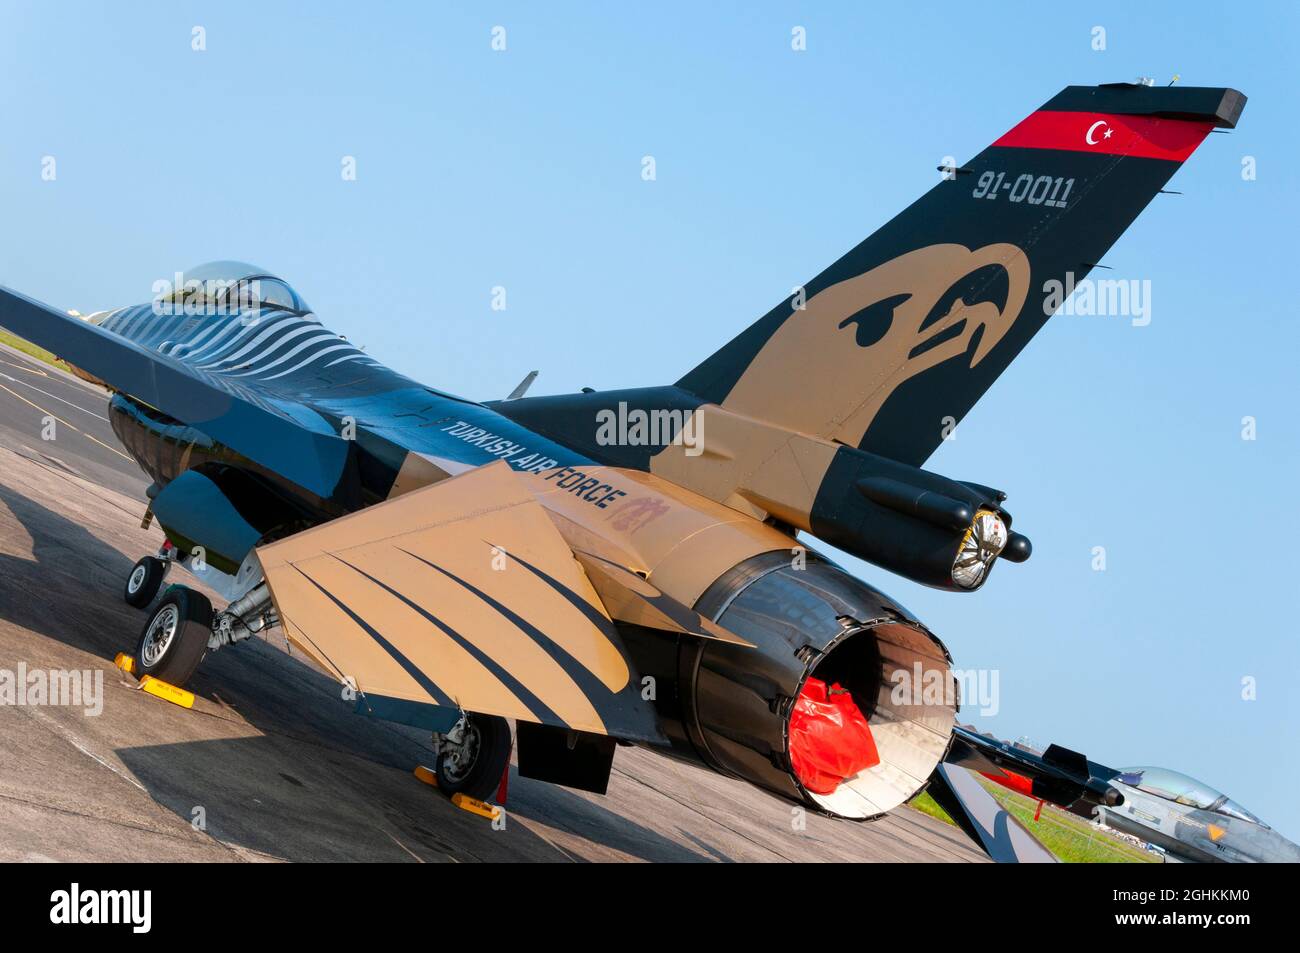 Solo Turk, Turkish Air Force General Dynamics F-16 Fighting Falcon jet fighter aereo al RAF Waddington Airshow, Regno Unito. Velivolo speciale dipinto Foto Stock